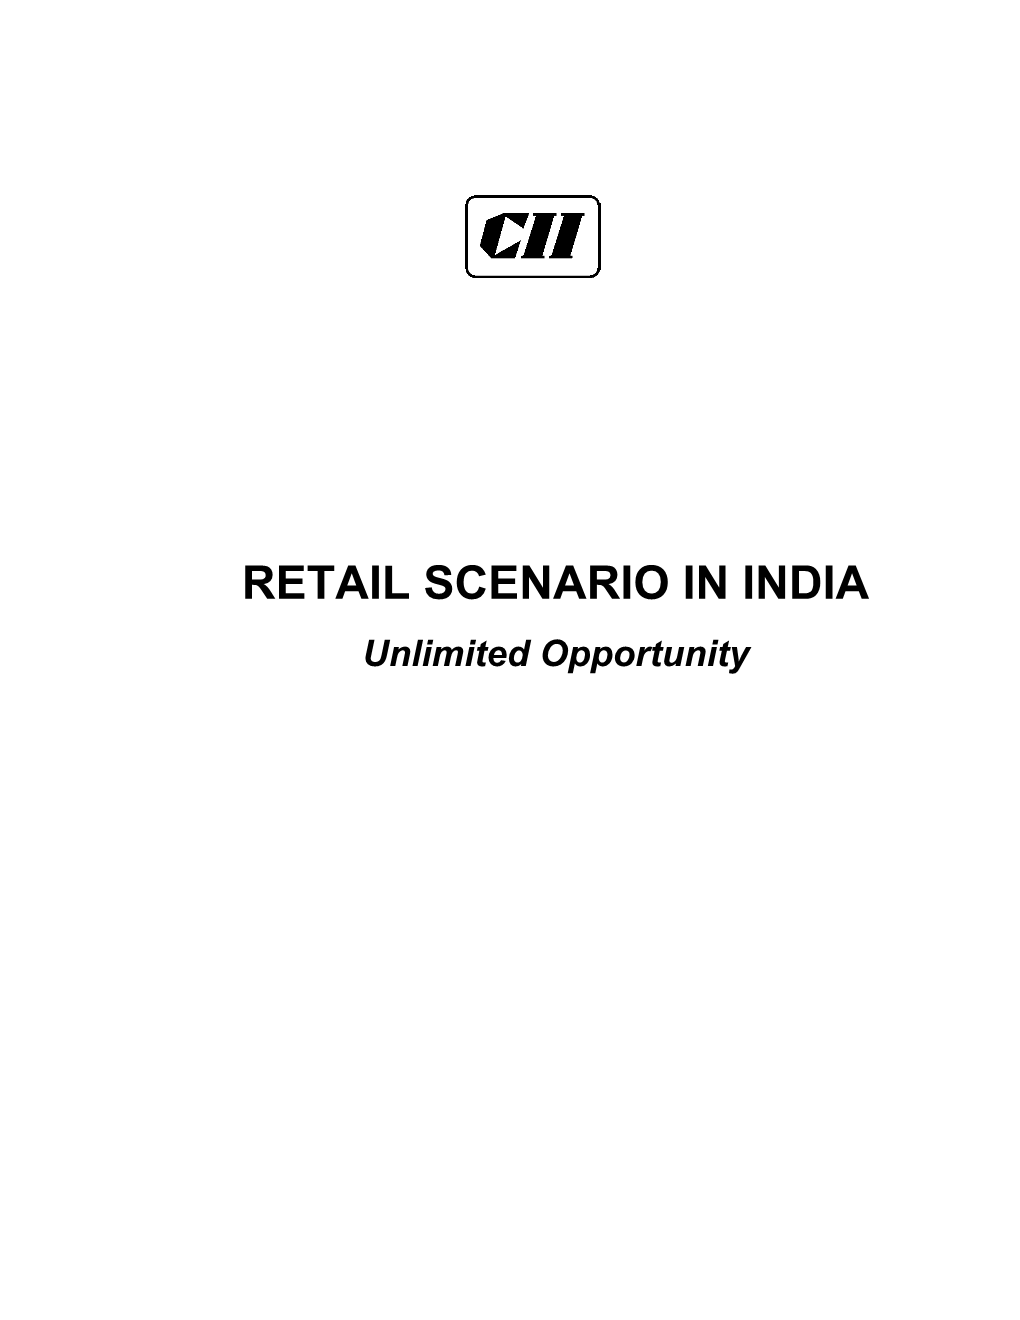 Retail Scenario in India: Unlimited Opportunity